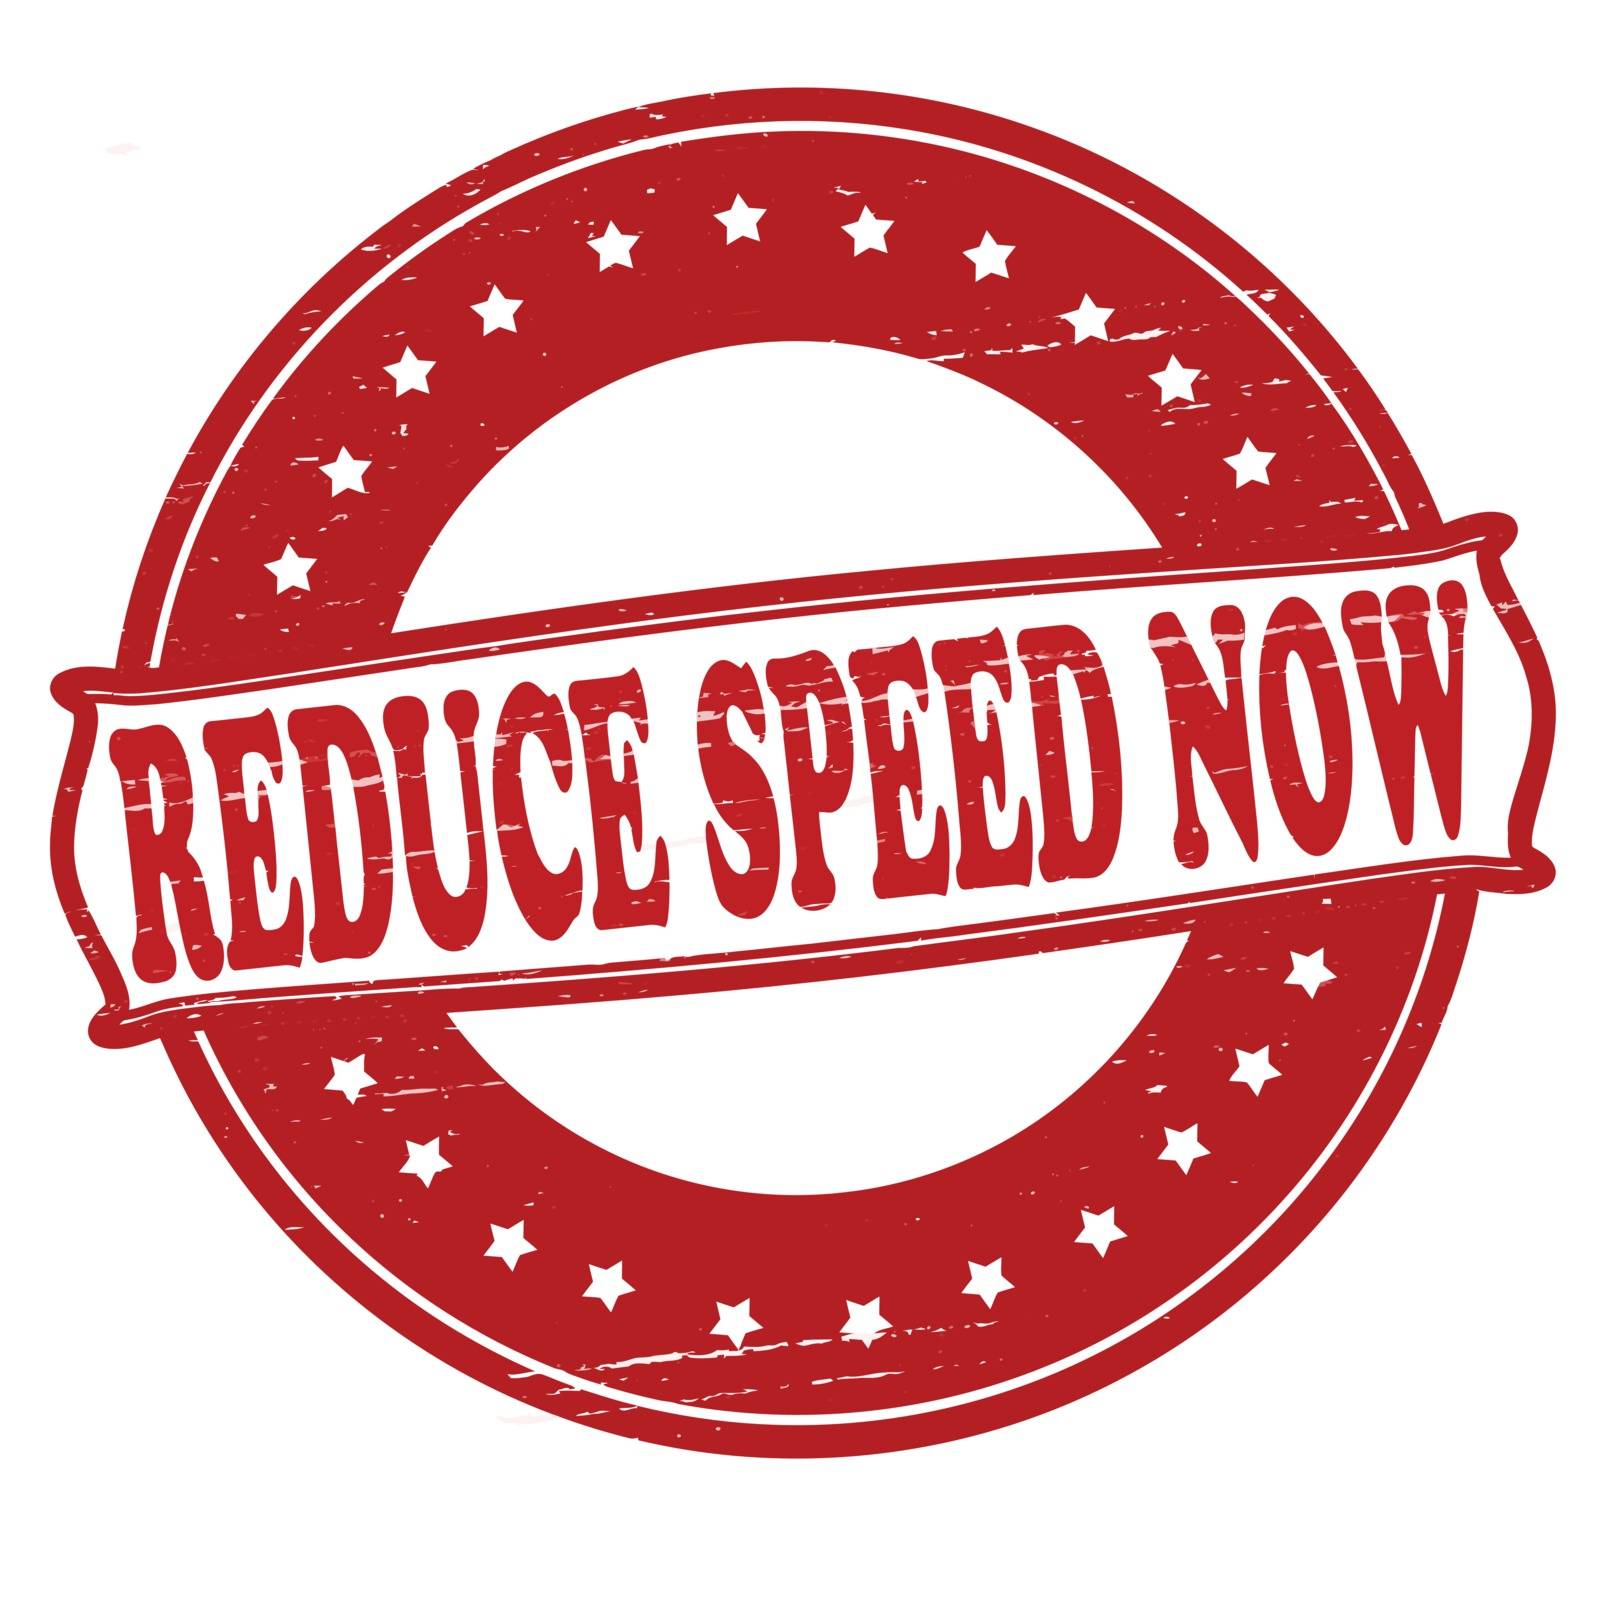 Reduce speed now by carmenbobo